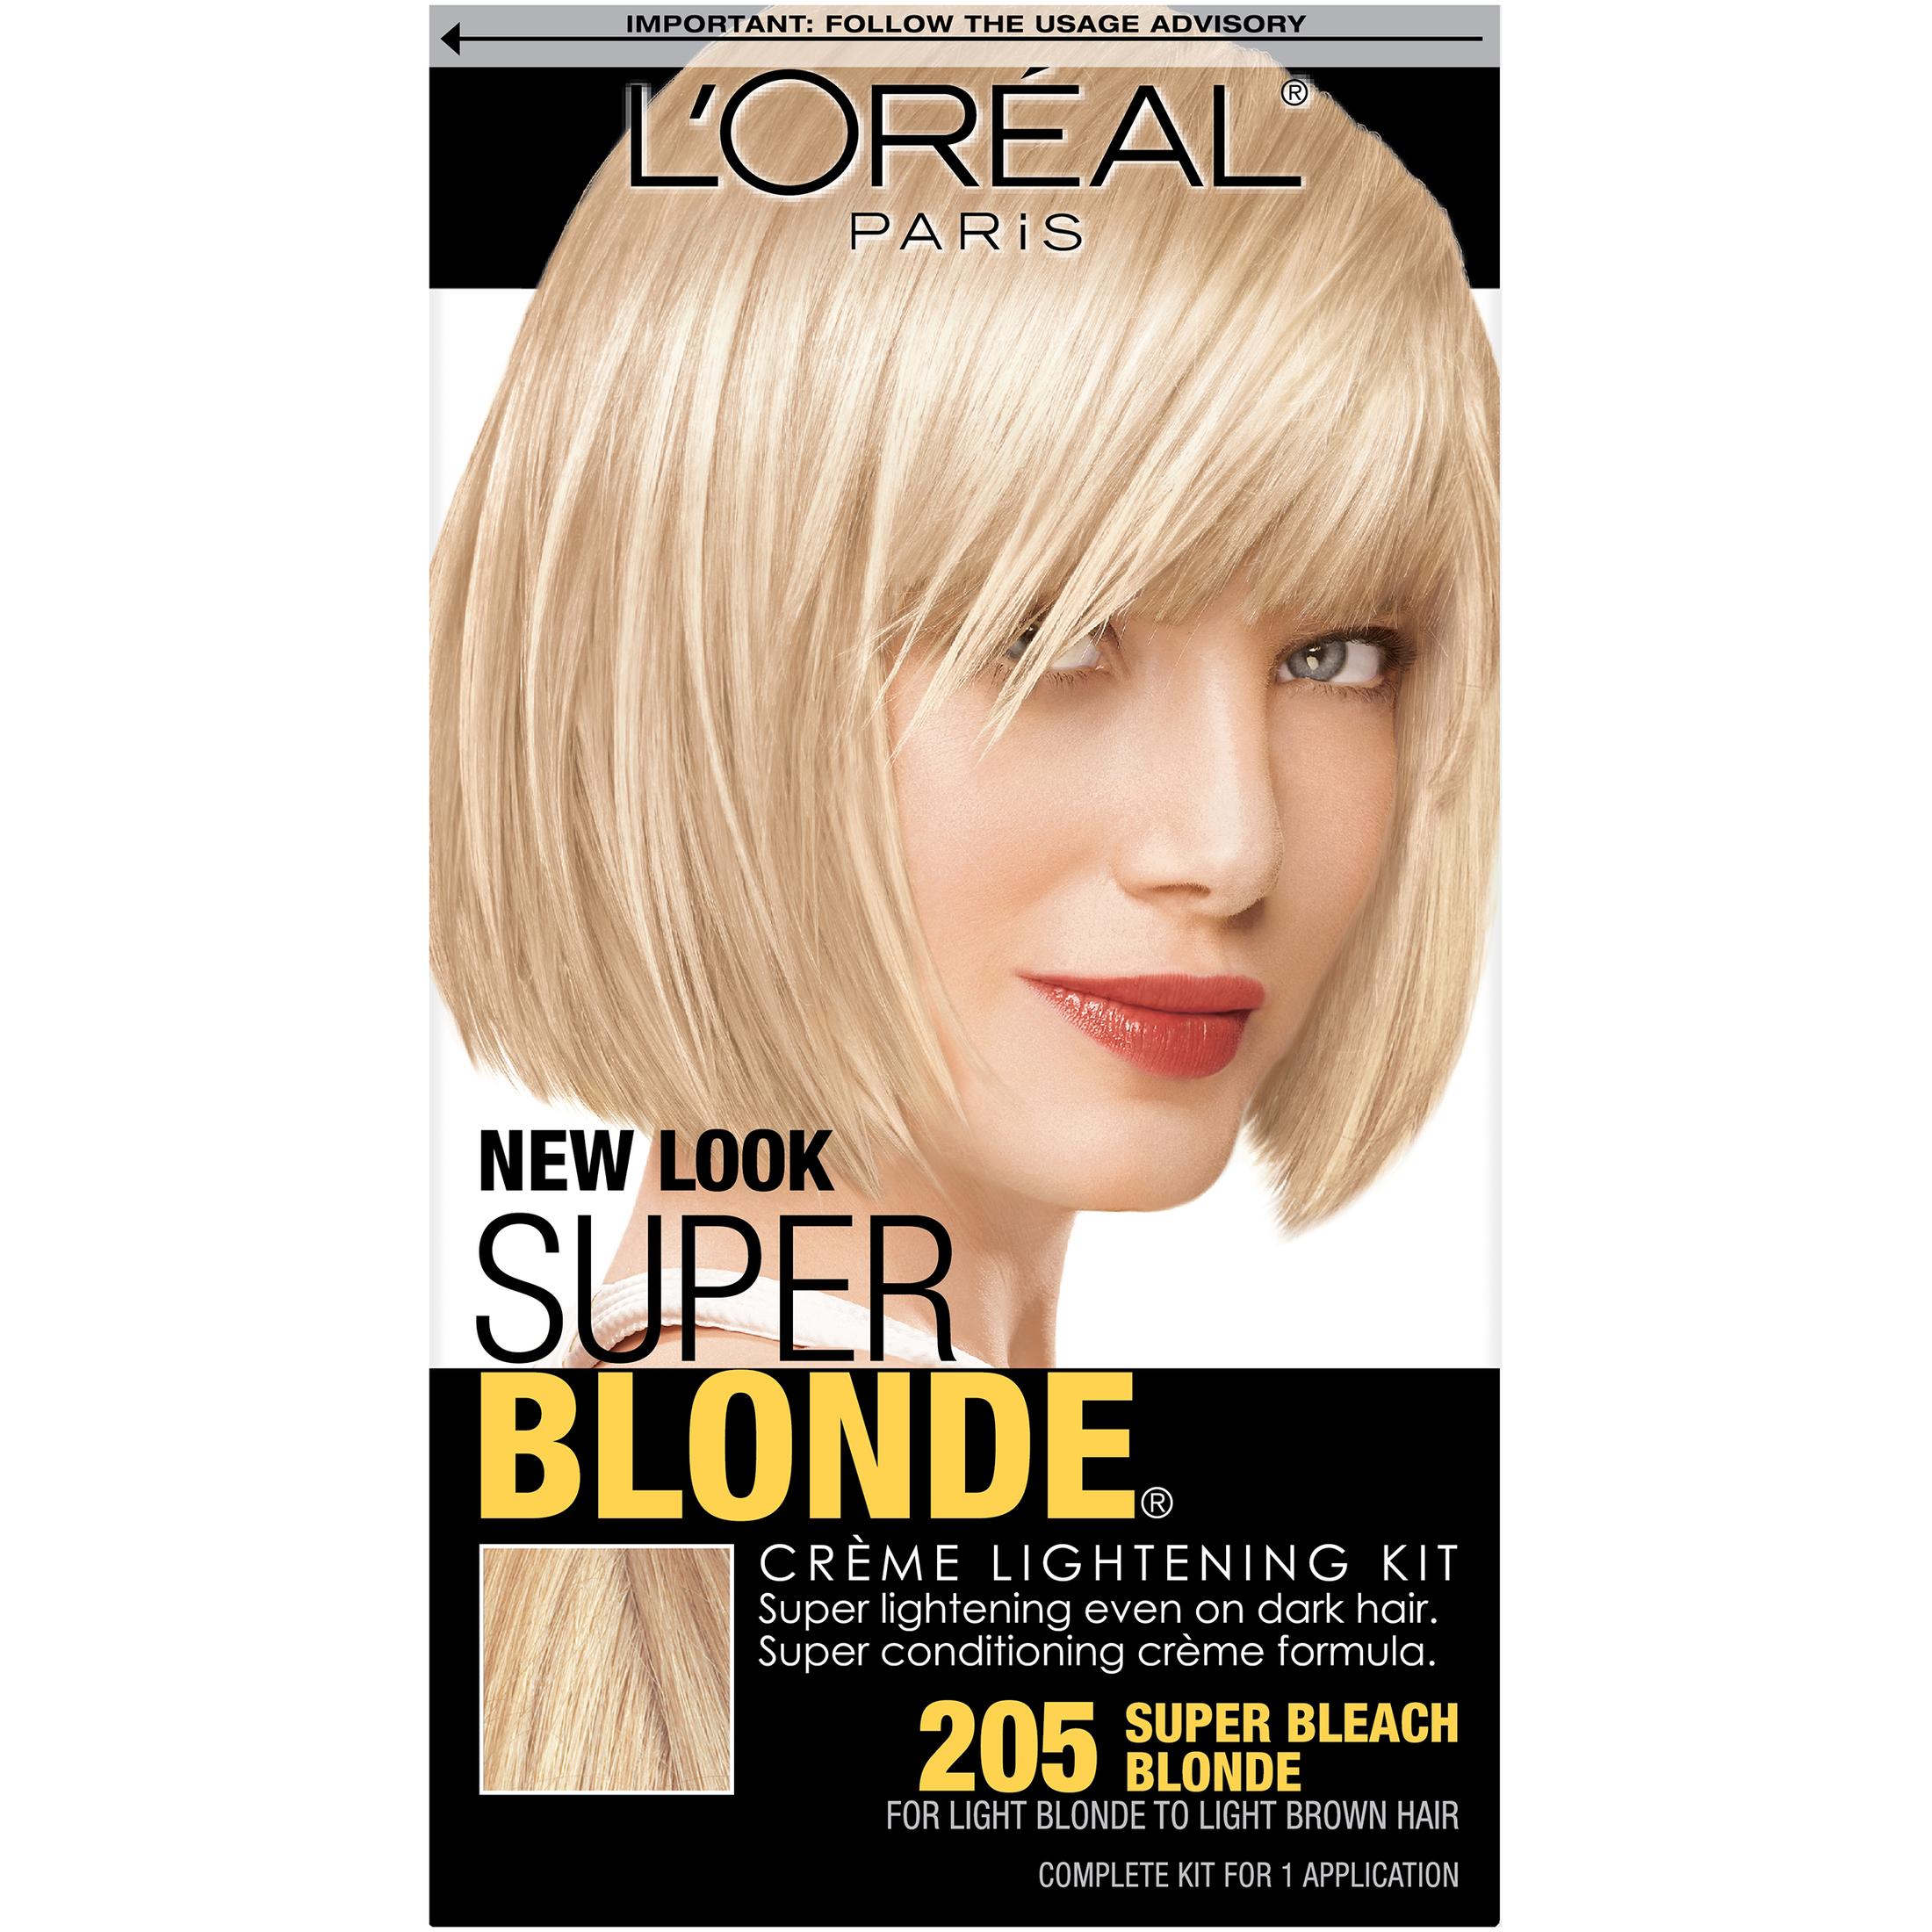 L'Oreal Paris Super Blonde Creme Hair Color Lightening Kit, 205 Light Brown To Light Blonde - image 1 of 6